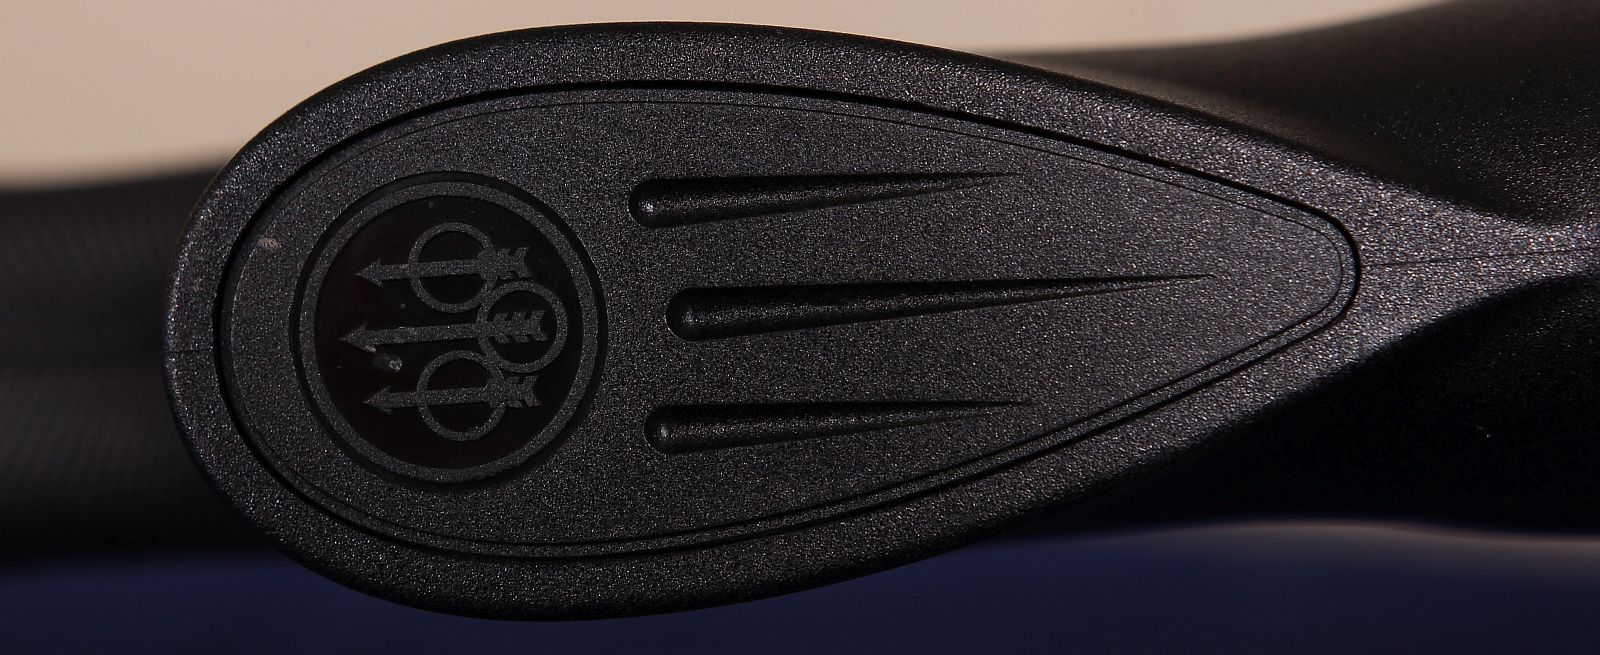 Beretta 1301 Comp Review